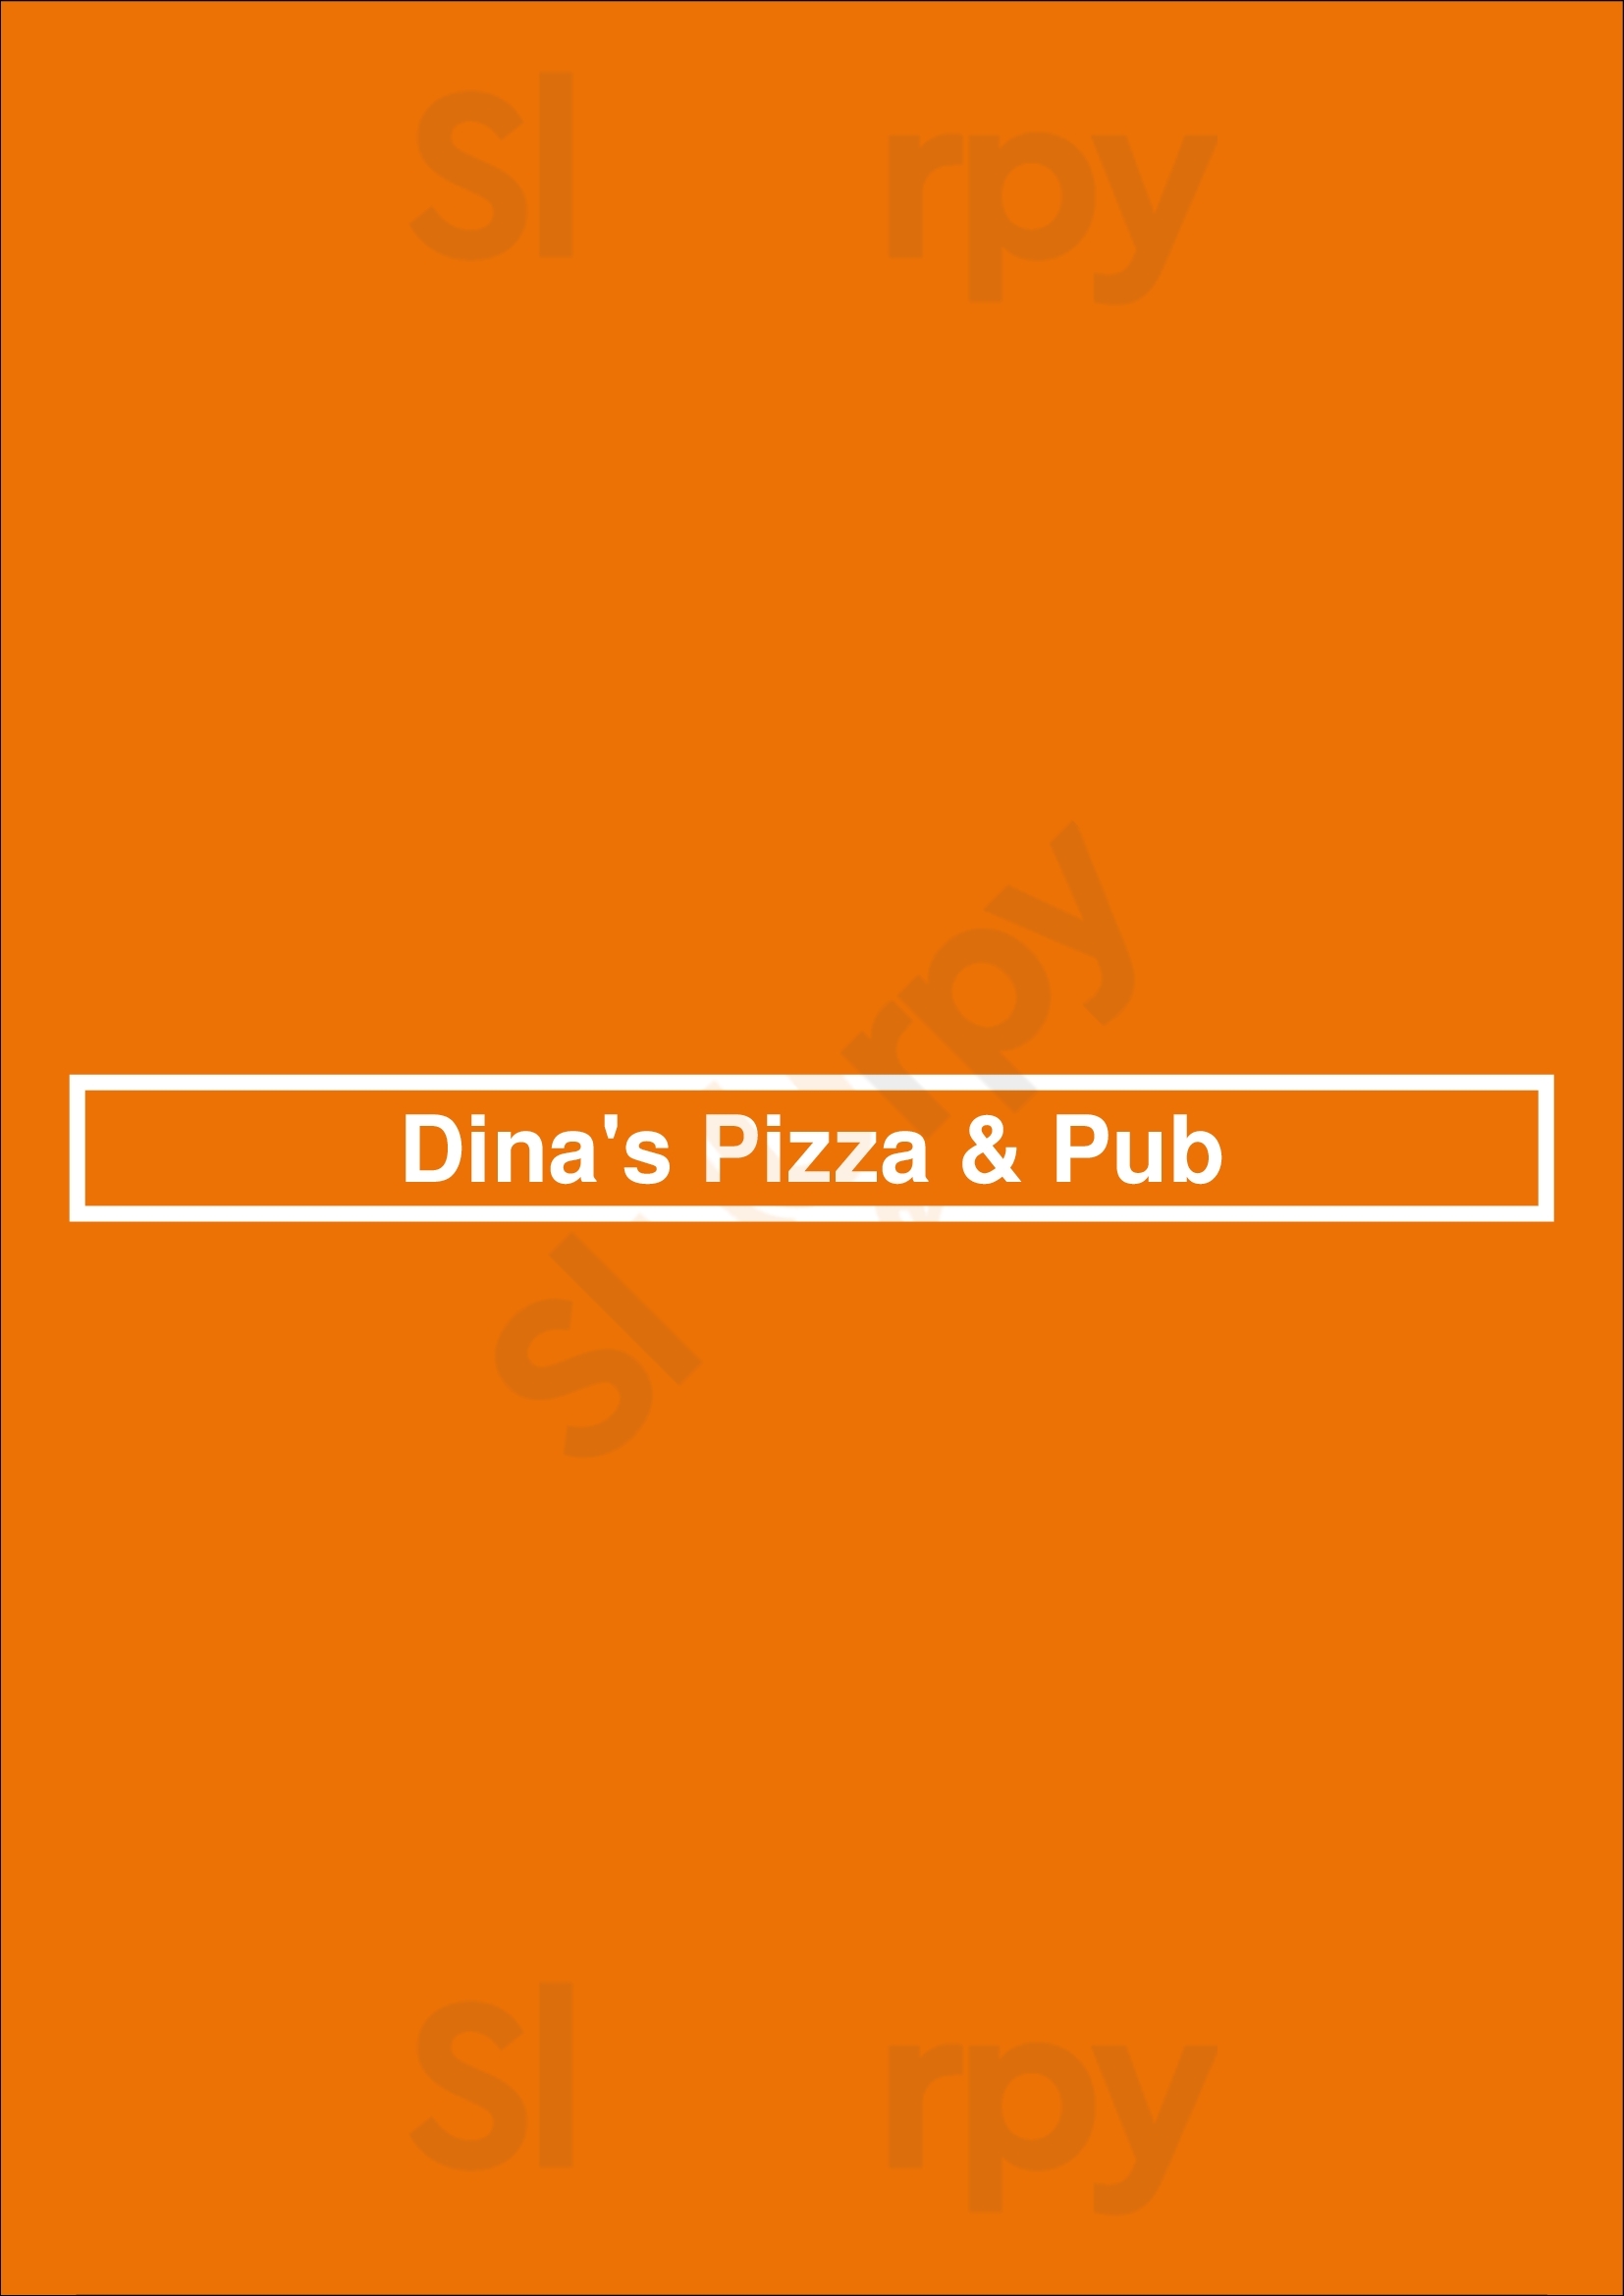 Dina's Pizza & Pub Cleveland Menu - 1